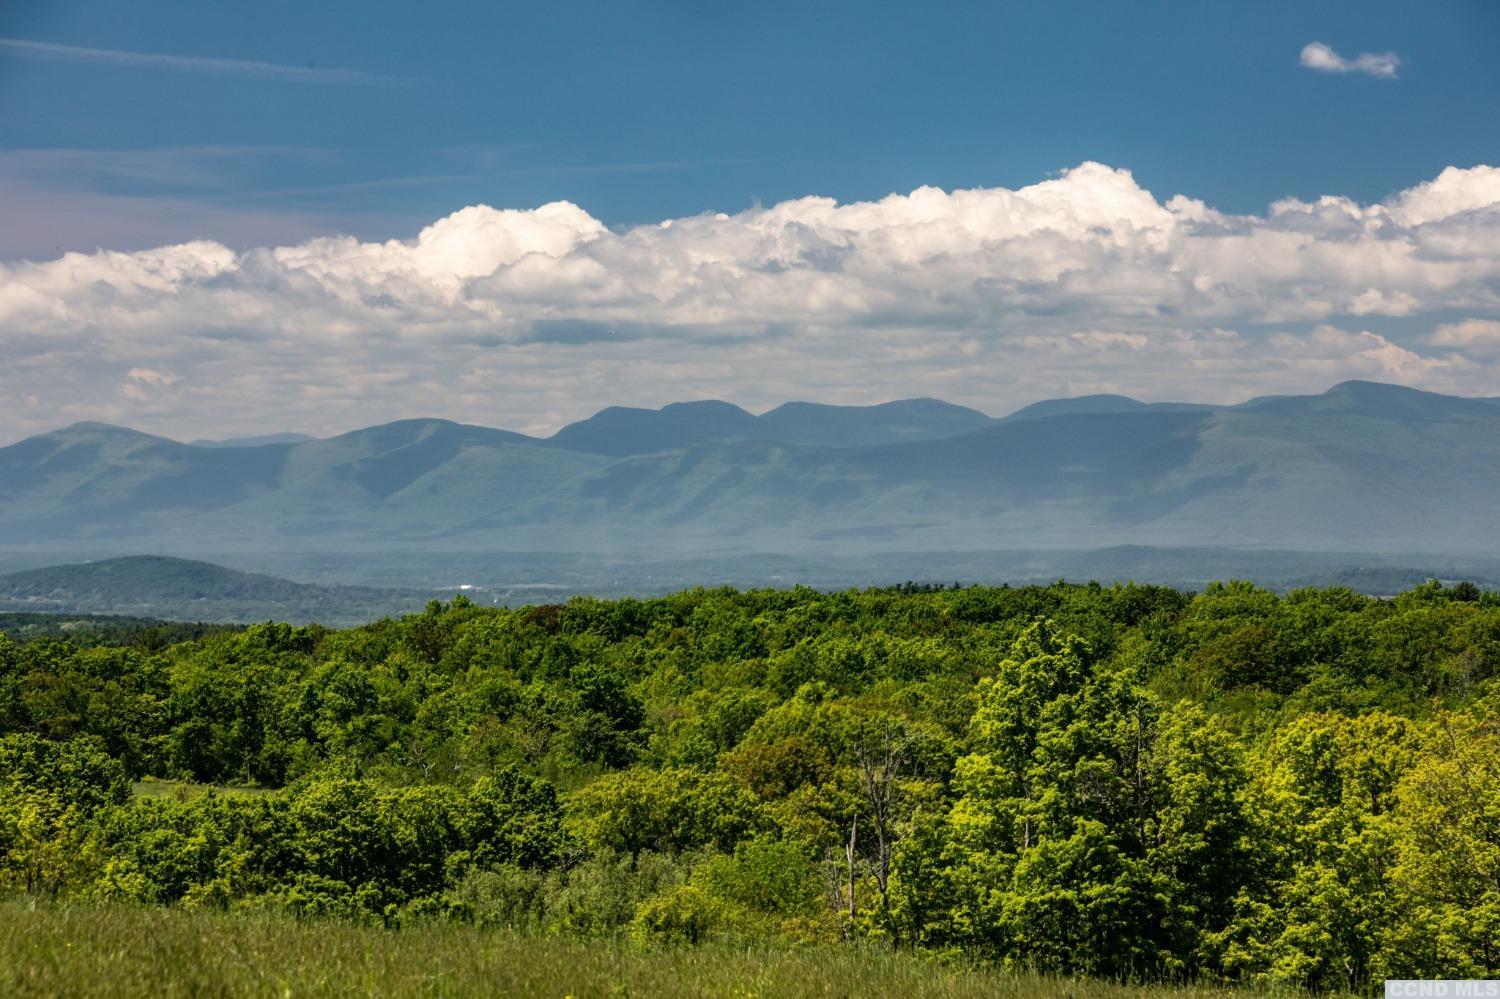 a view of a lush green mountain